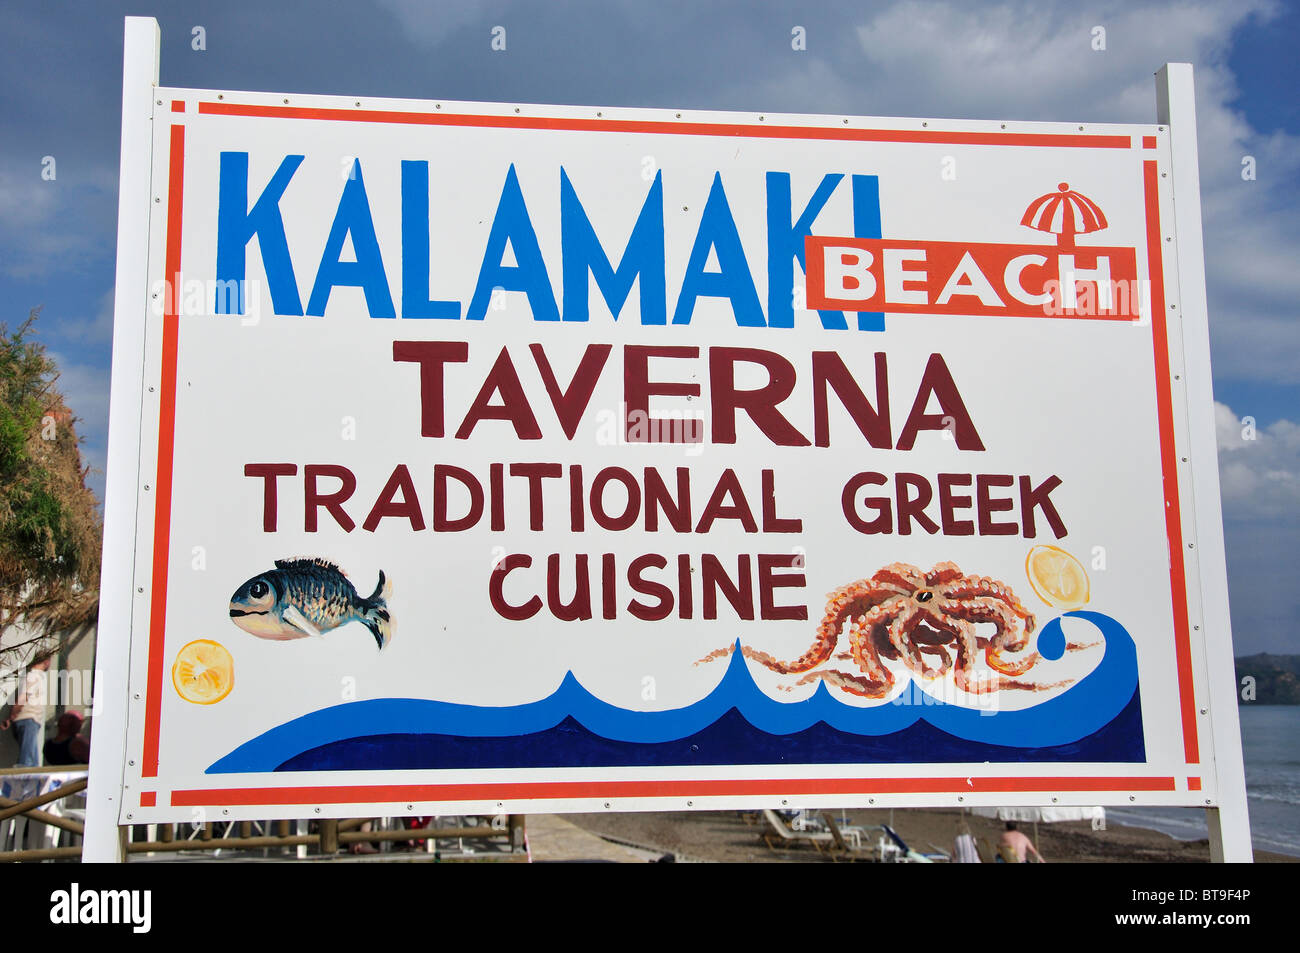 Kalamaki Taverna on Kalamaki Beach, Kalamaki, Zakynthos, Ionian Islands, Greece Stock Photo